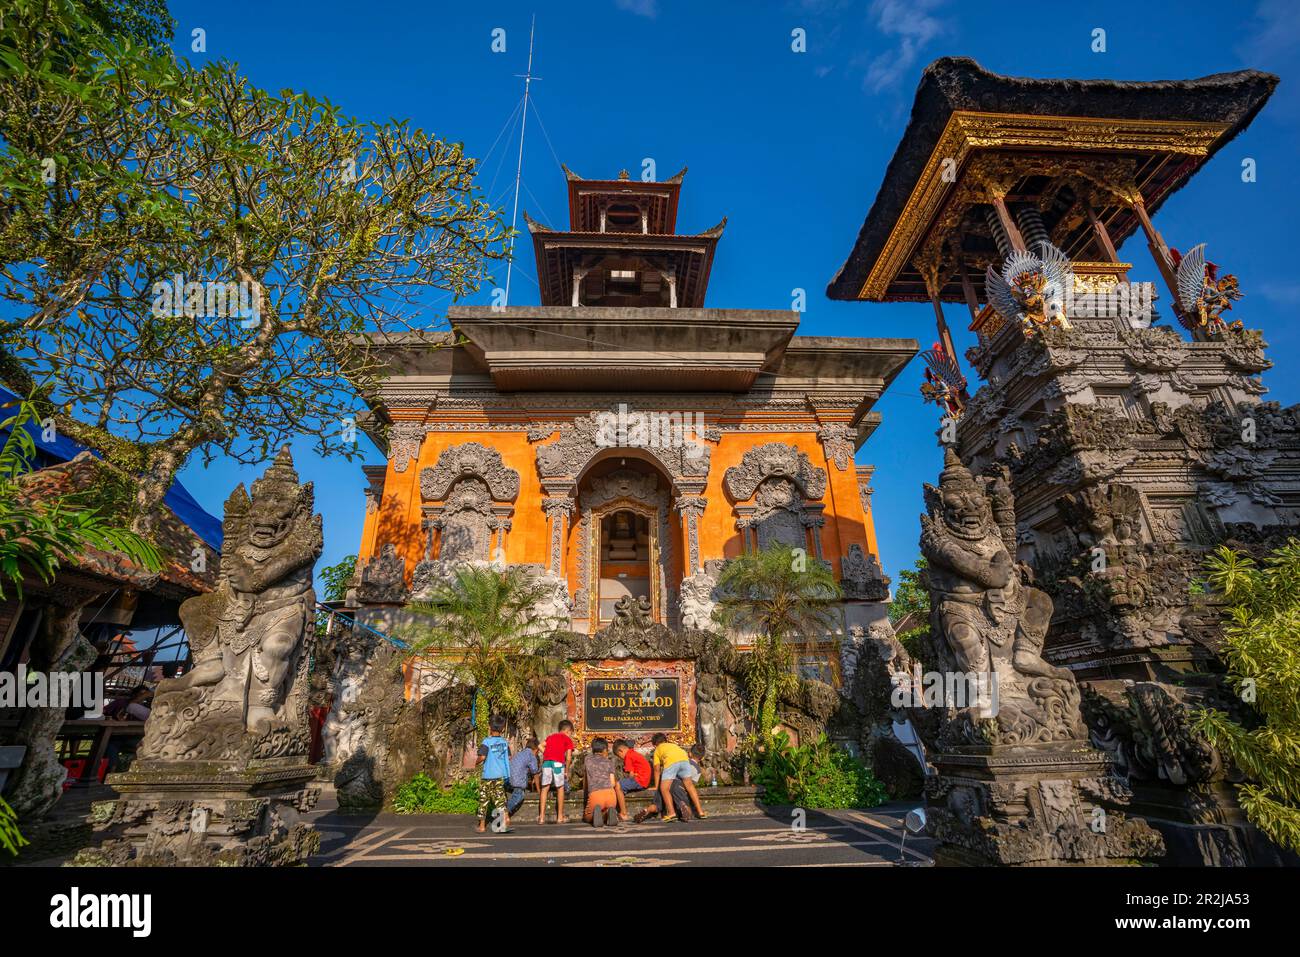 View of Bale Banjar Temple in Ubud, Ubud, Kabupaten Gianyar, Bali, Indonesia, South East Asia, Asia Stock Photo